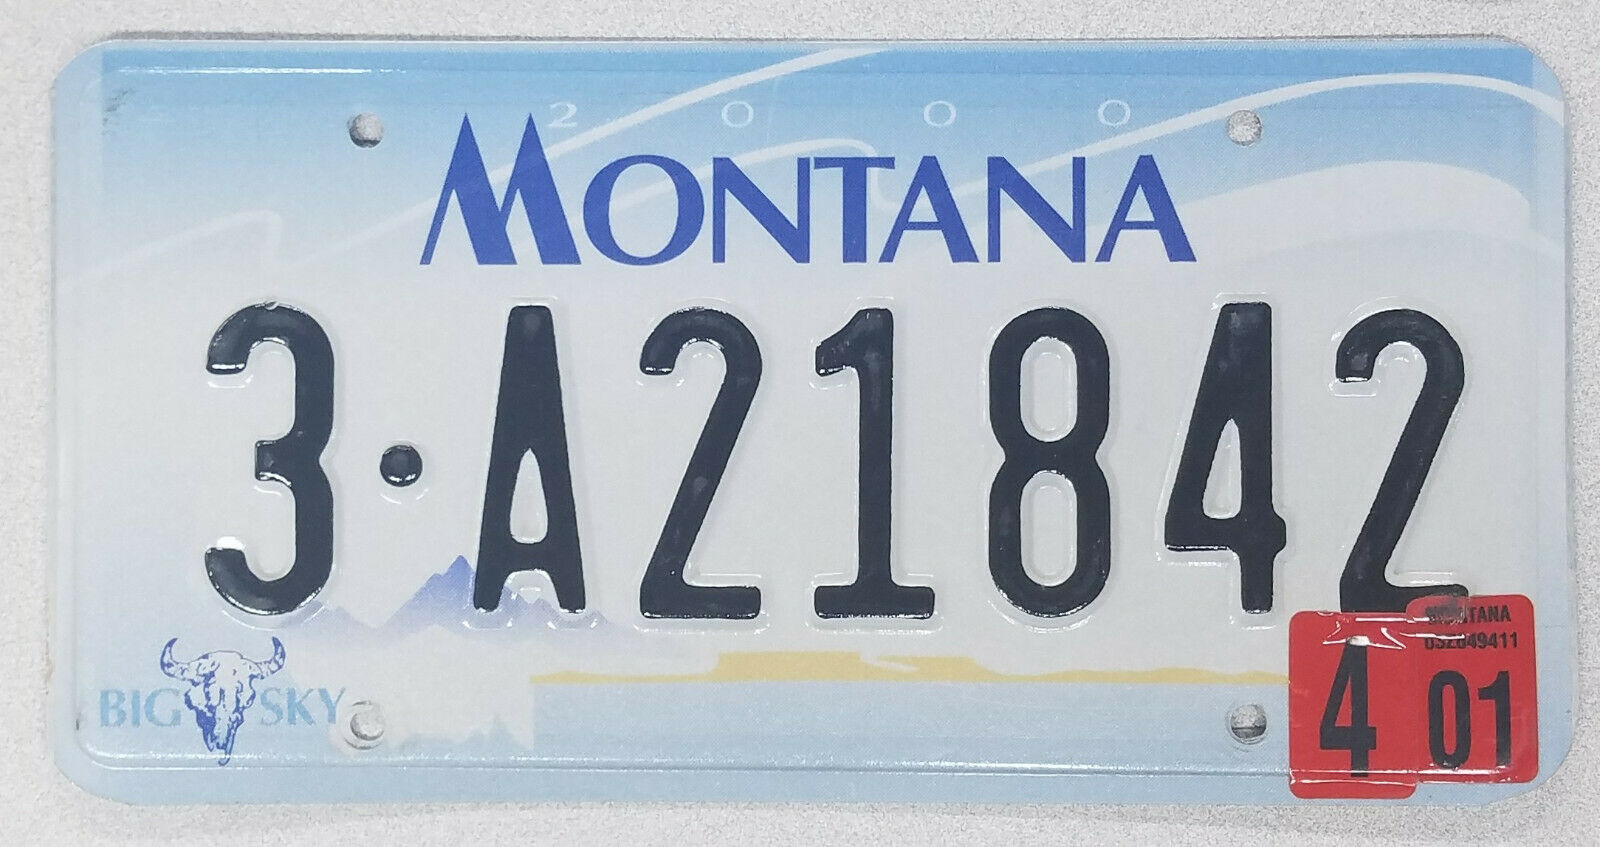 Montana Expired 2000 Big Sky Mountain Range Base License Plate ~ 3-a21842